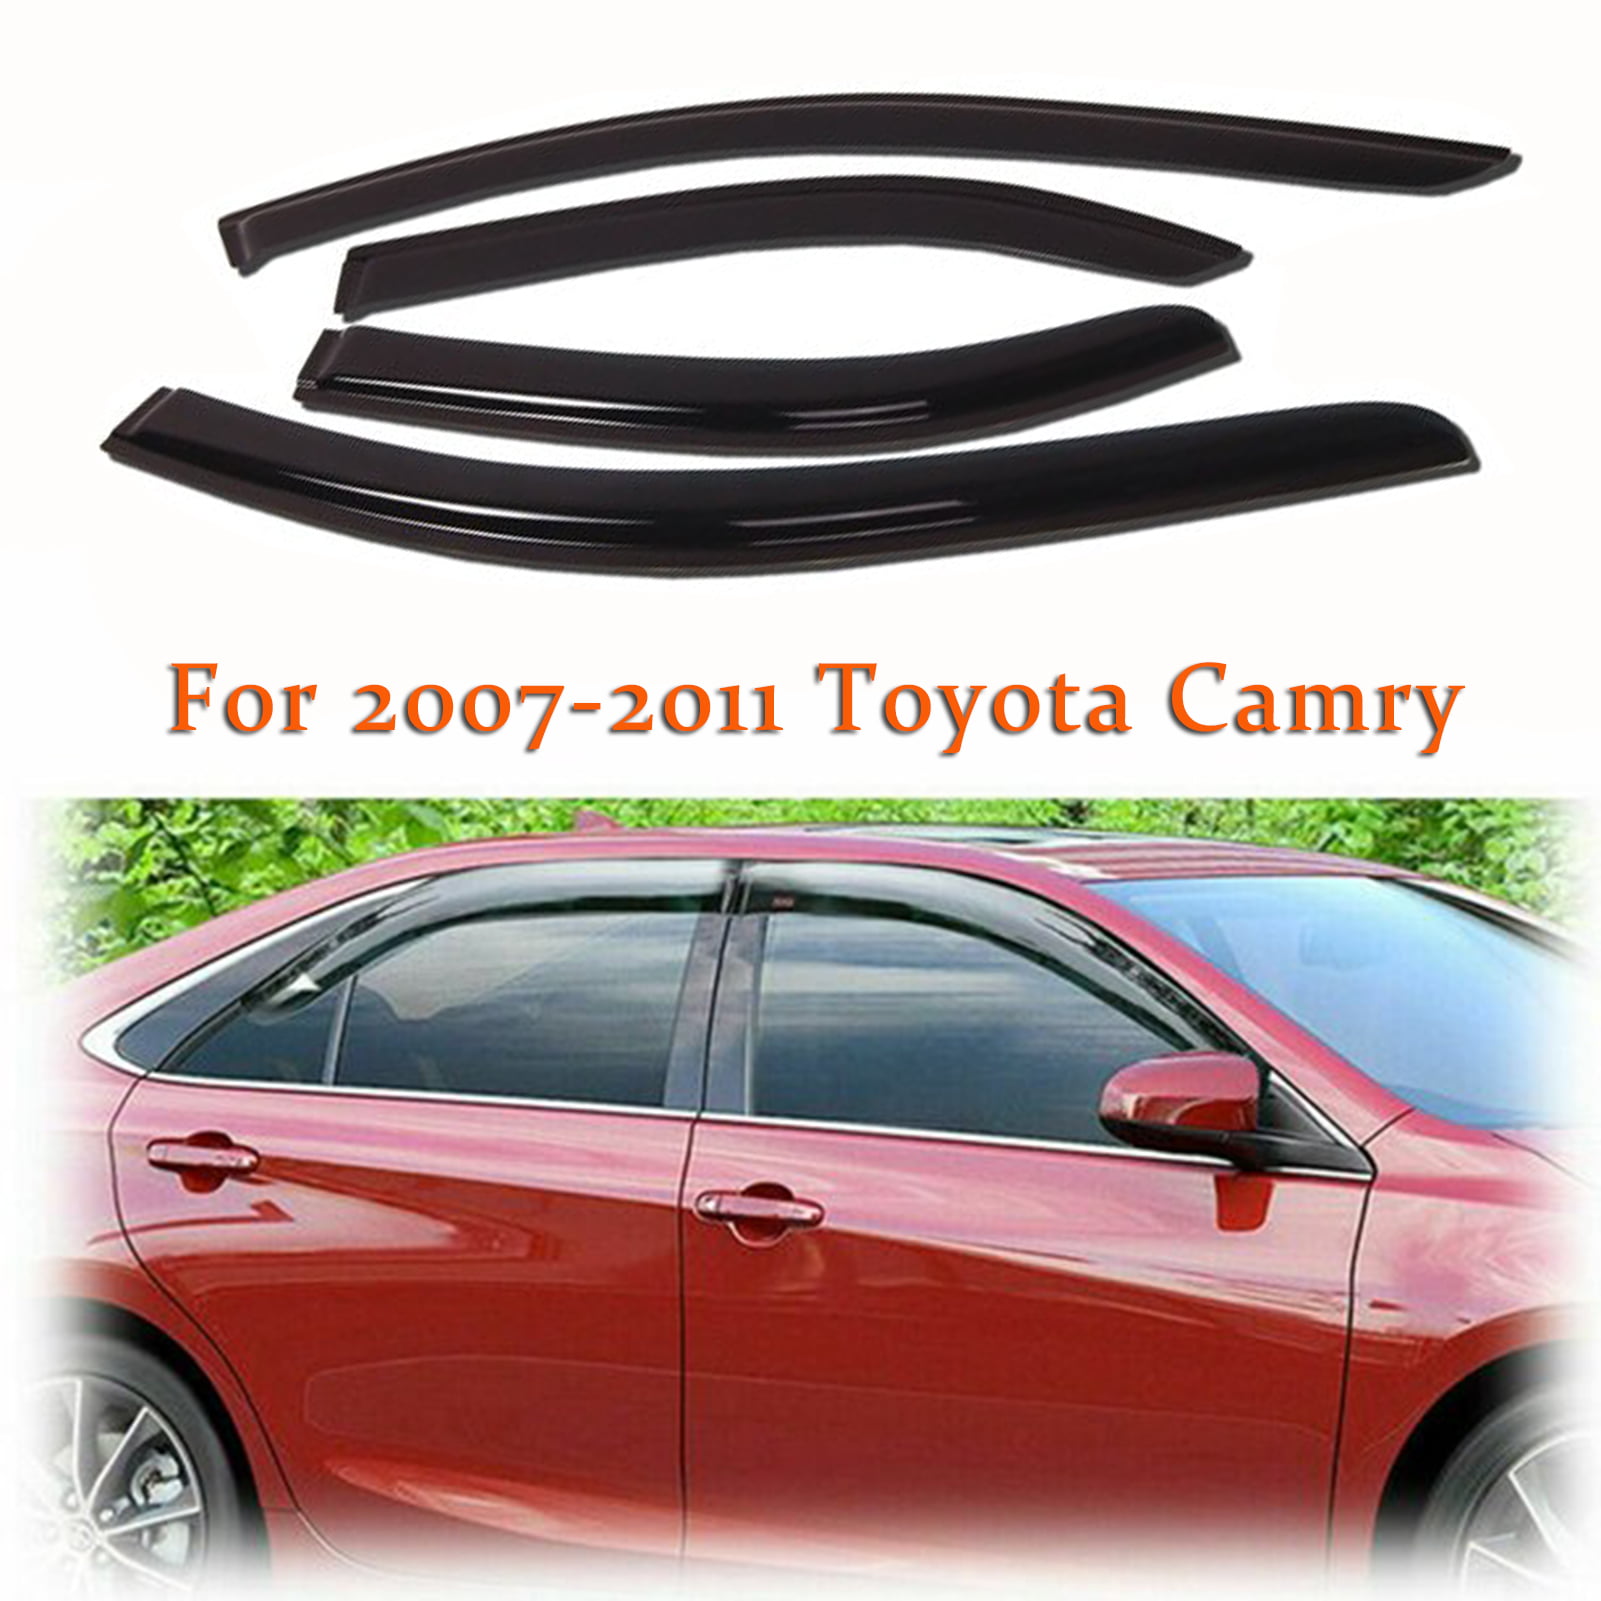 Fits Toyota Camry 2007-2011 RI ABS Smoked Tape On Window Visors Rain Guards 